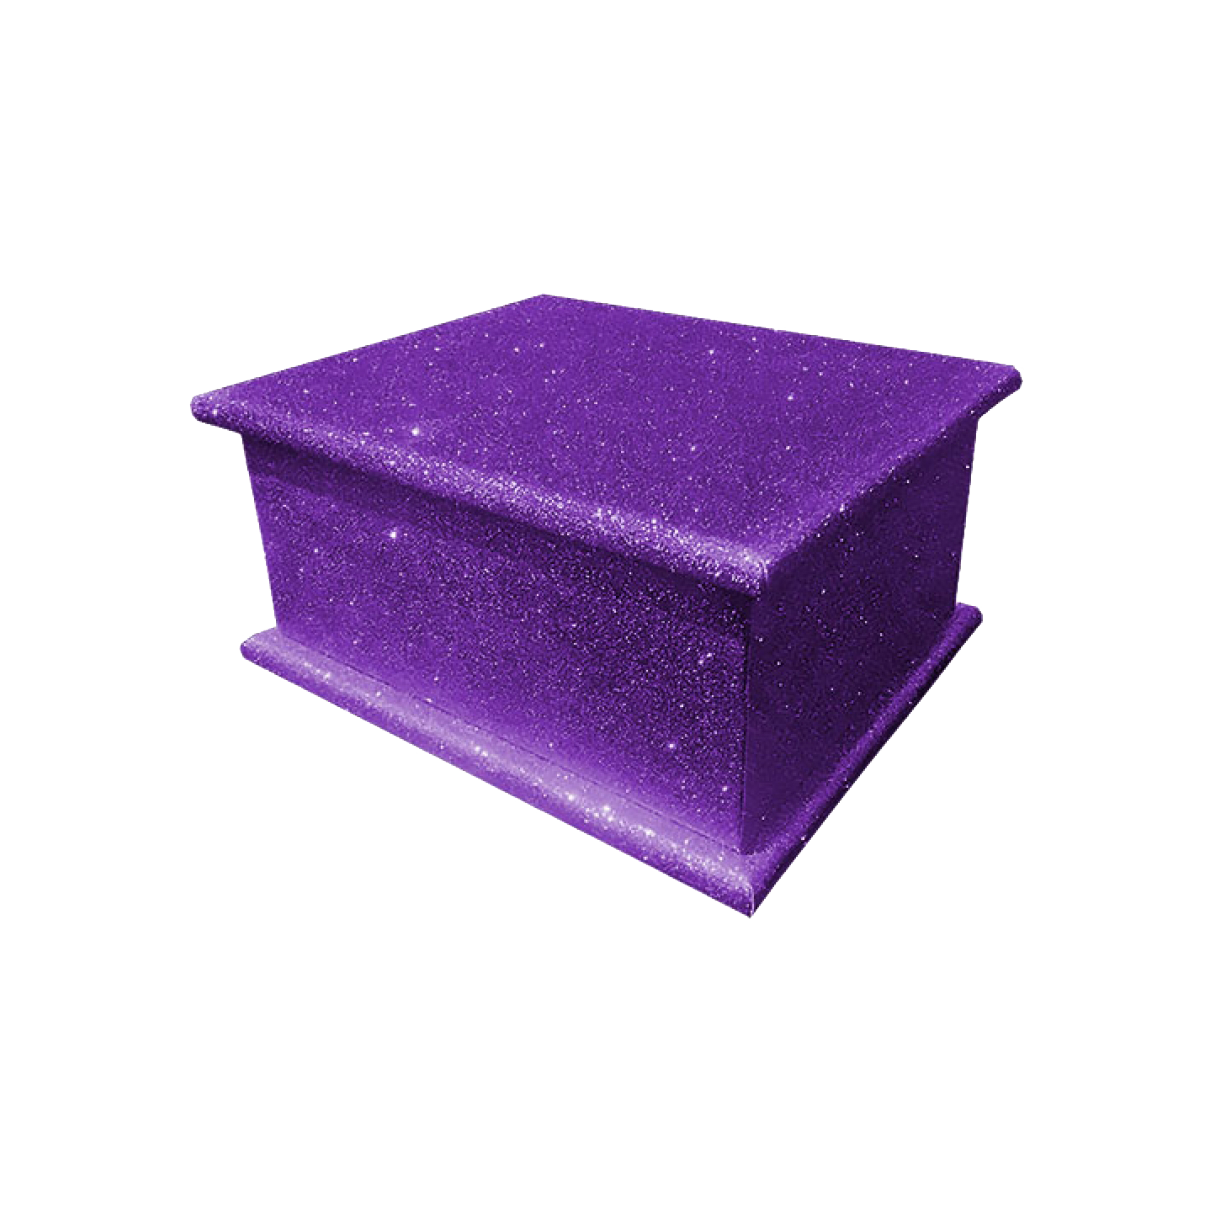 Glitter Adult Ashes Casket – Purple